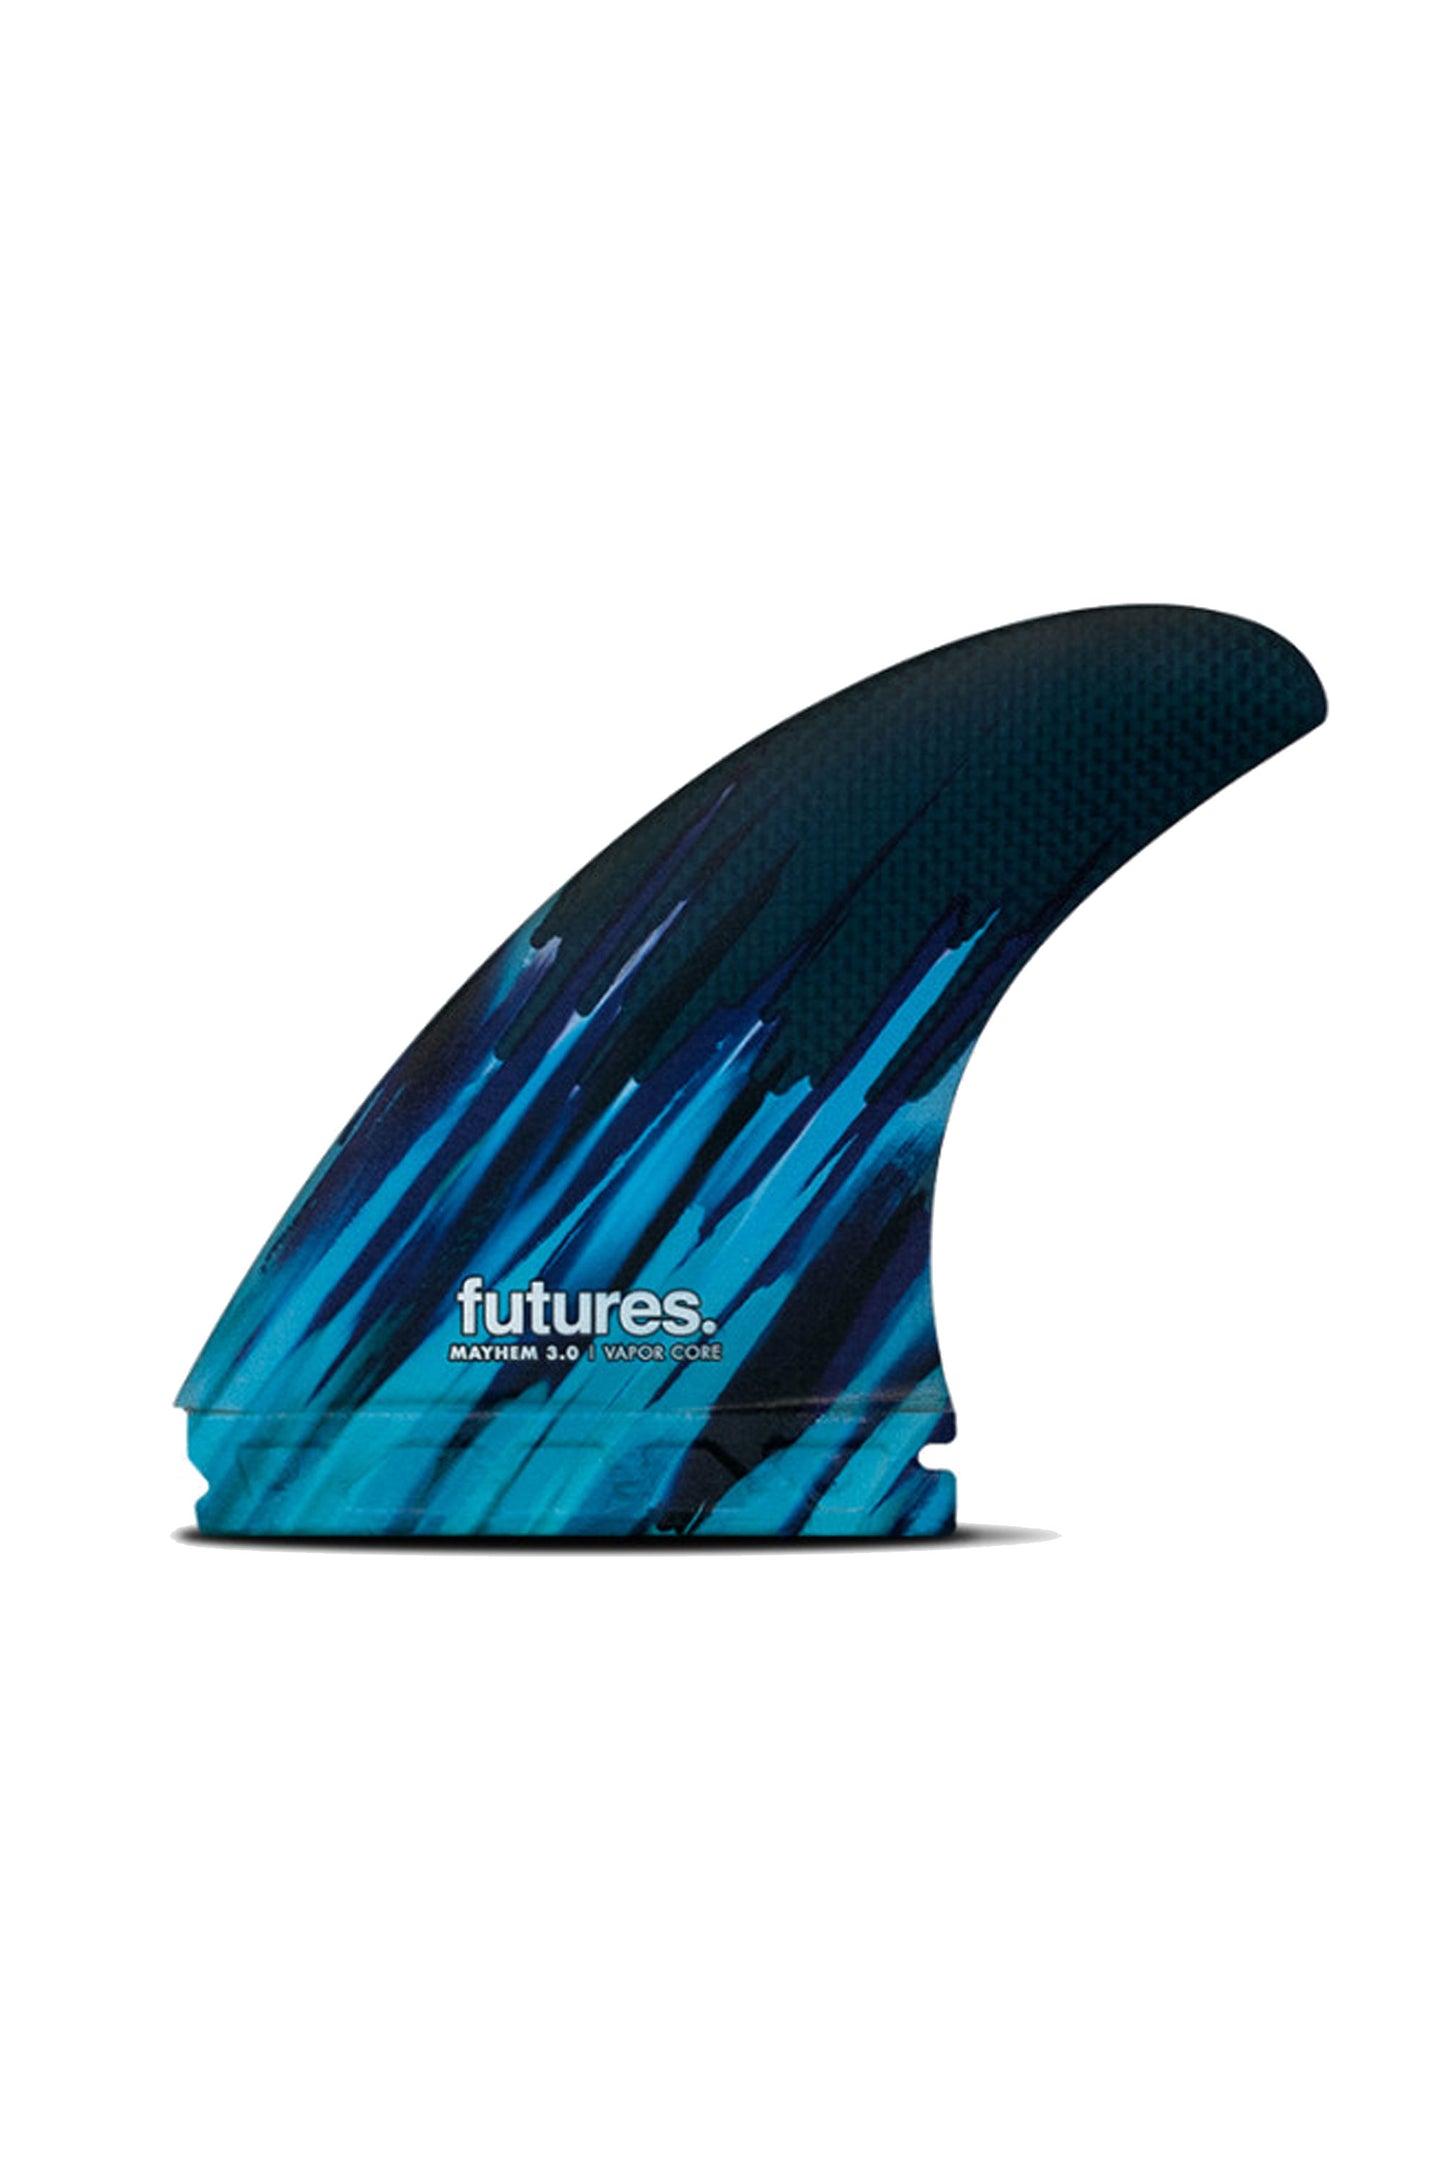 Pukas-Surf-Shop-Futures-thruster-mayhem-3-carbon-blue